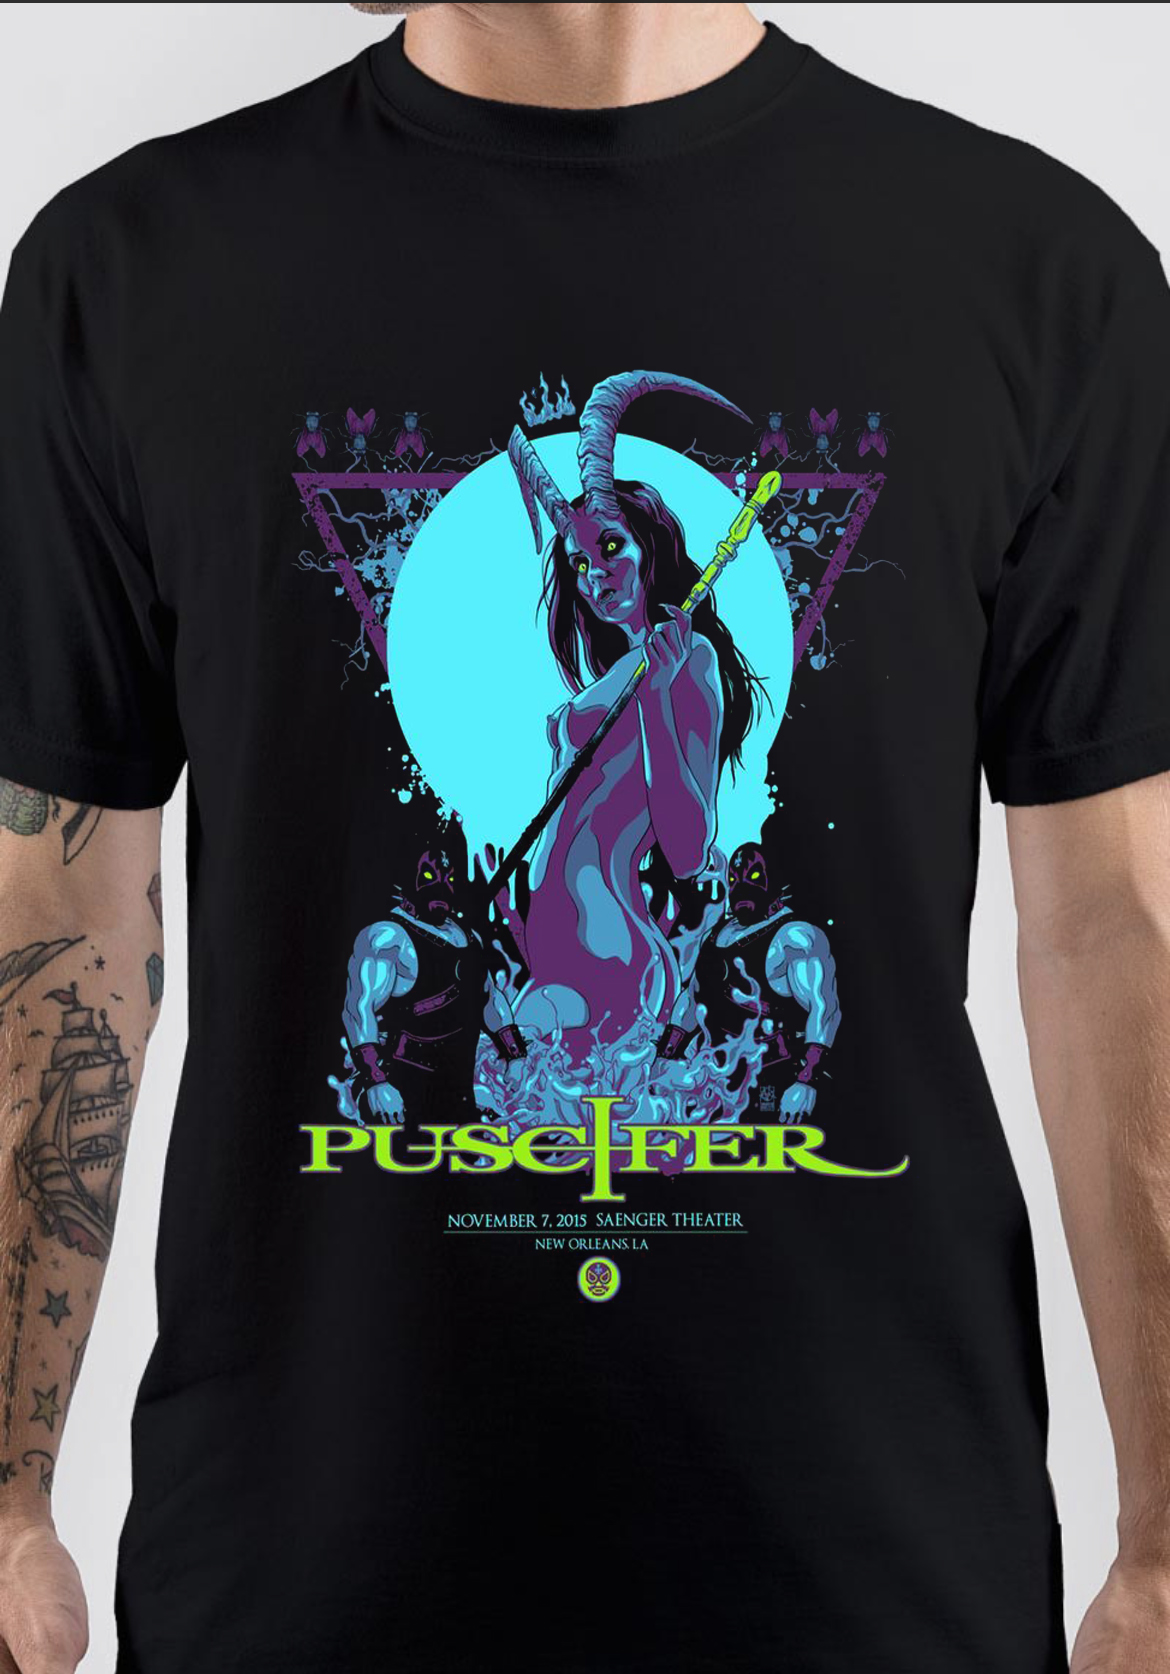 Puscifer T-Shirt And Merchandise